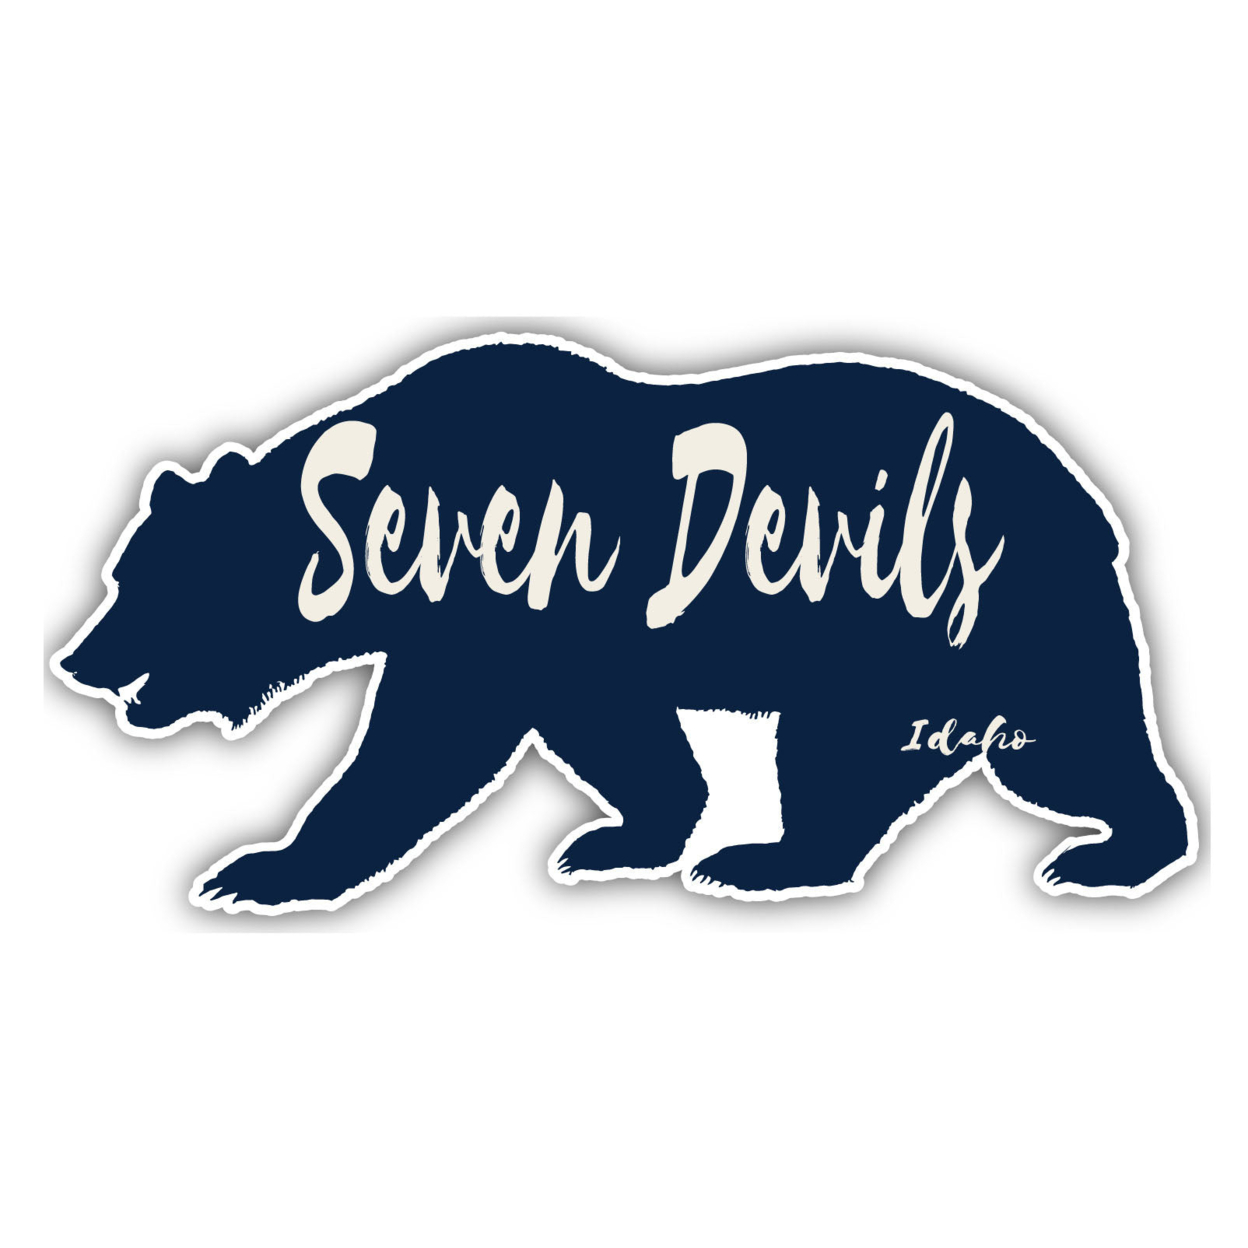 Seven Devils Idaho Souvenir Decorative Stickers (Choose Theme And Size) - Single Unit, 2-Inch, Bear